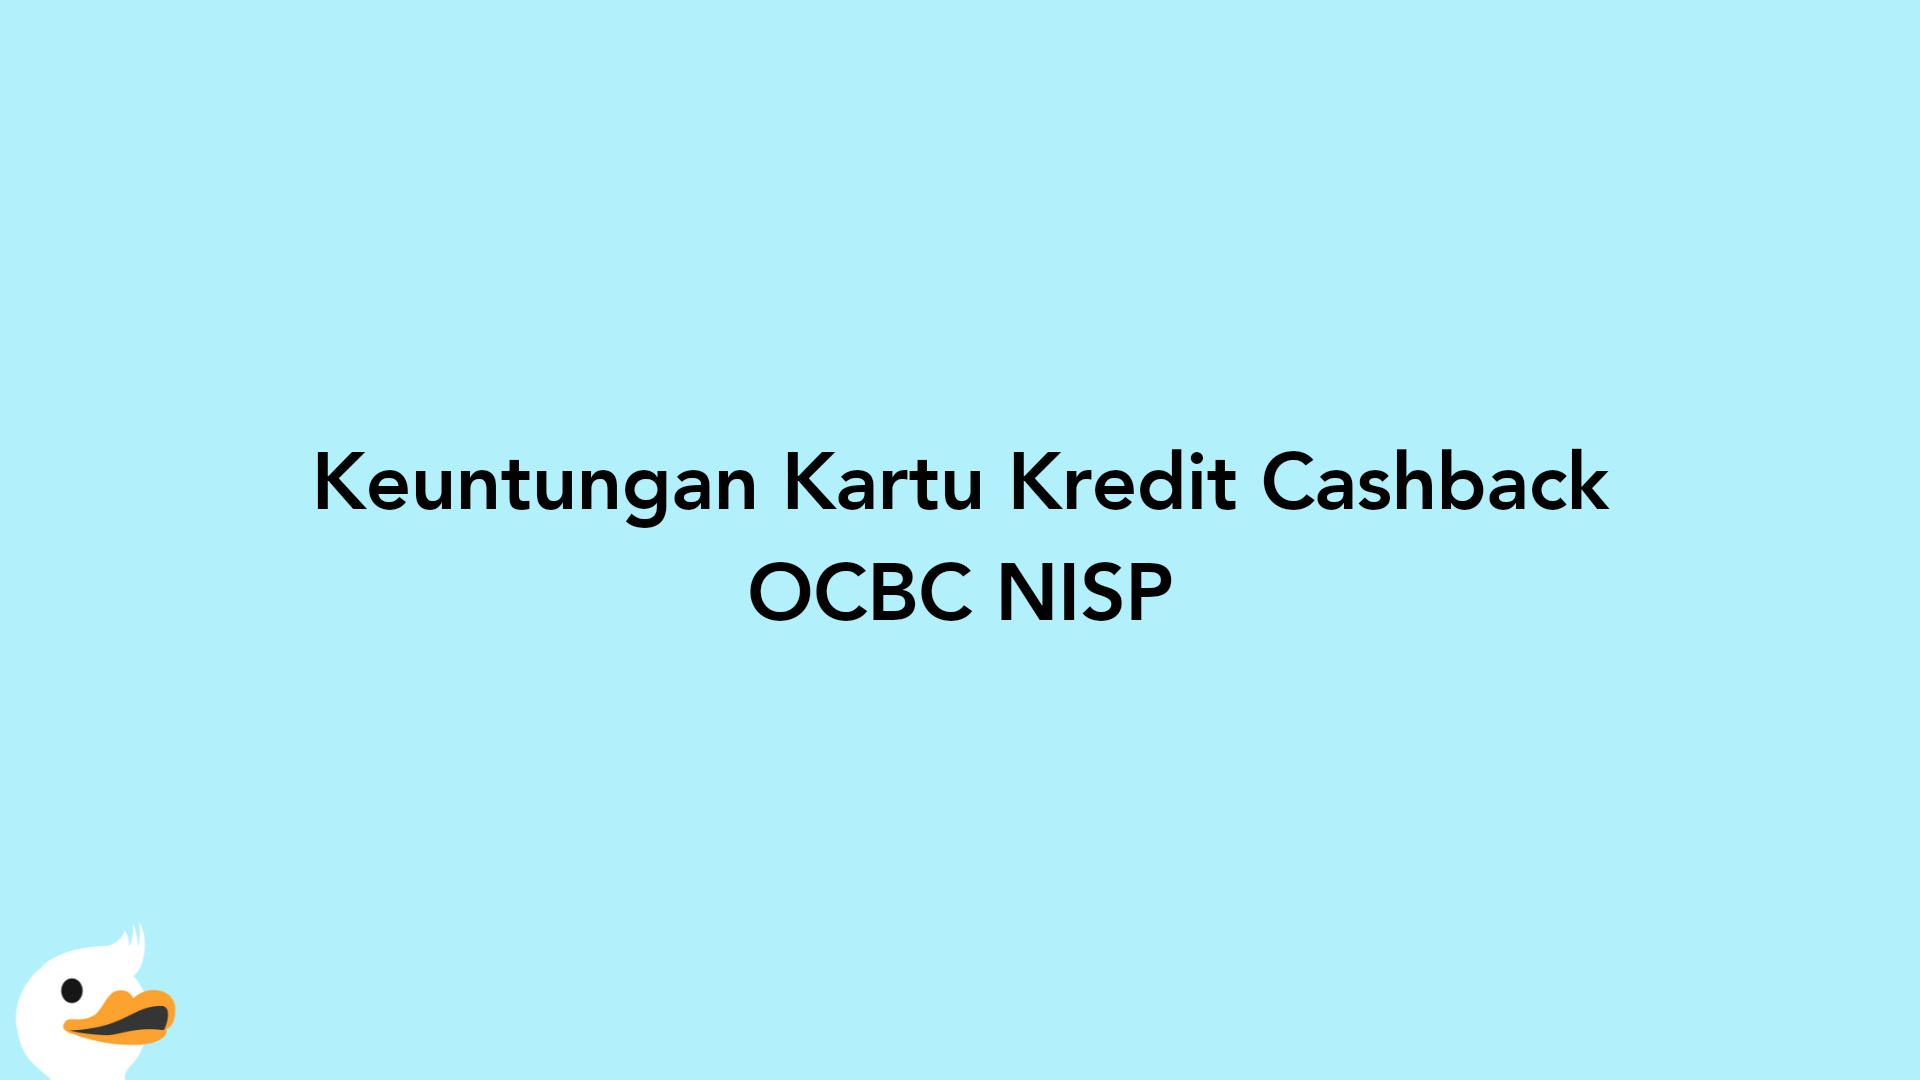 Keuntungan Kartu Kredit Cashback OCBC NISP